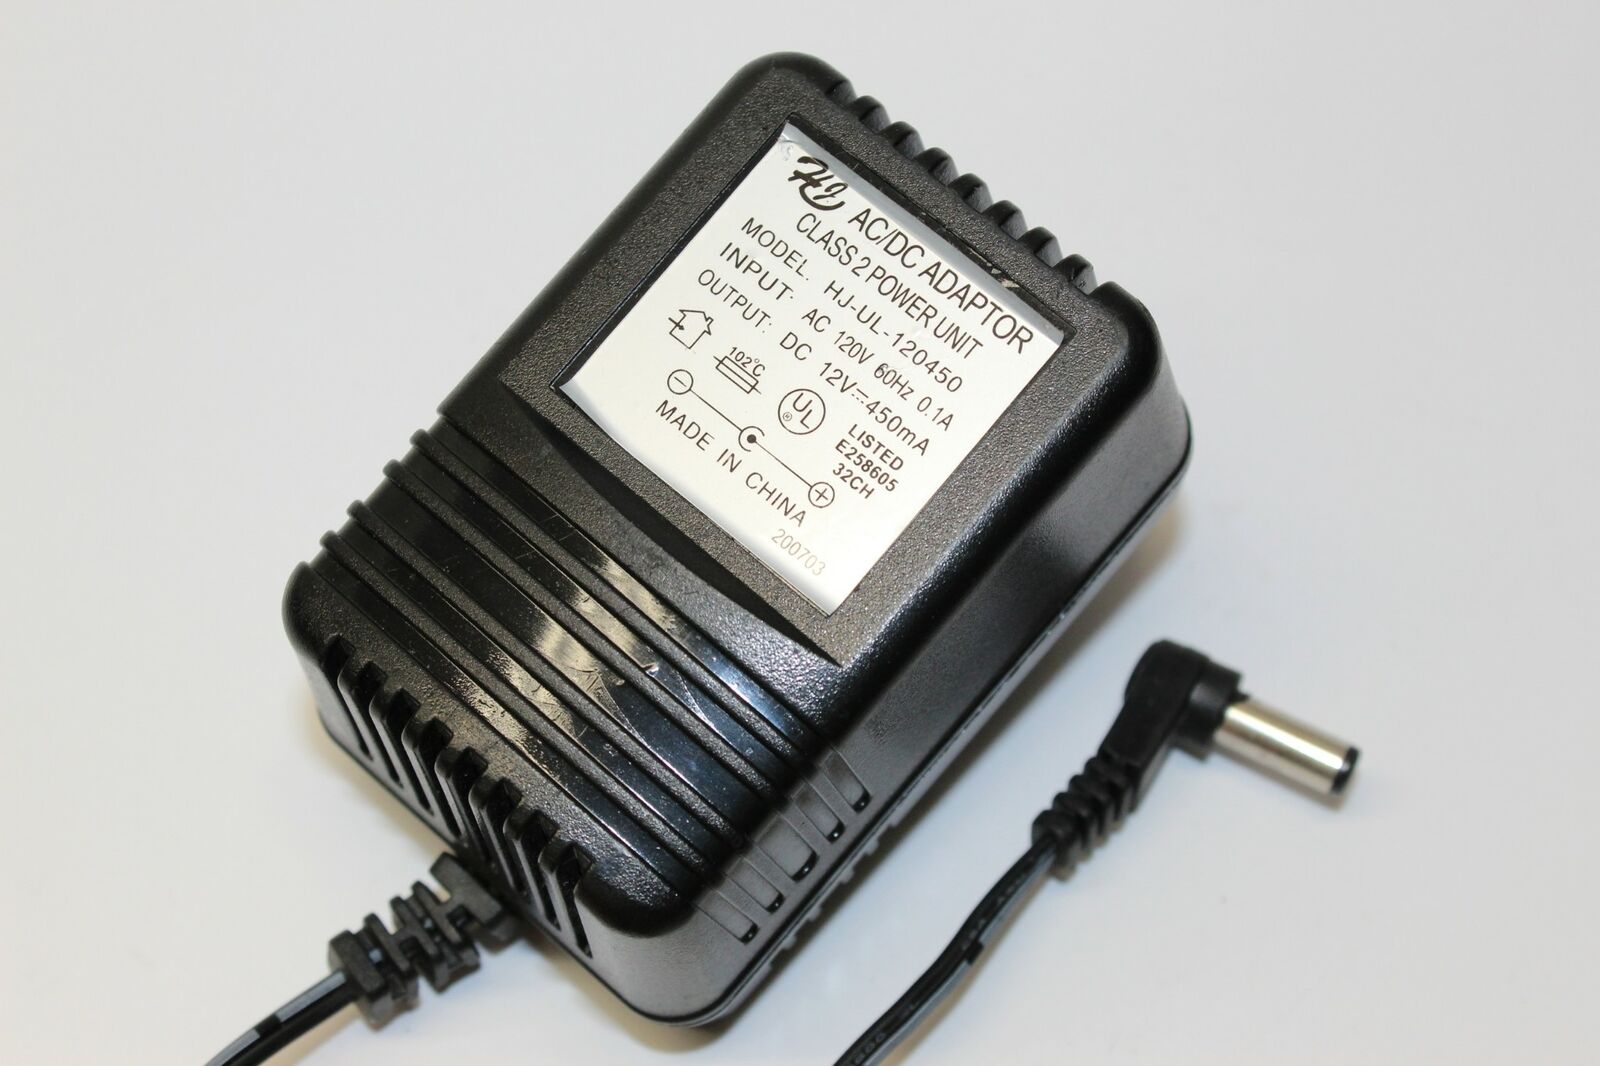 New 12V 450mA HJ HJ-UL-120450 Class 2 Transformer Power Supply Ac Adapter - Click Image to Close